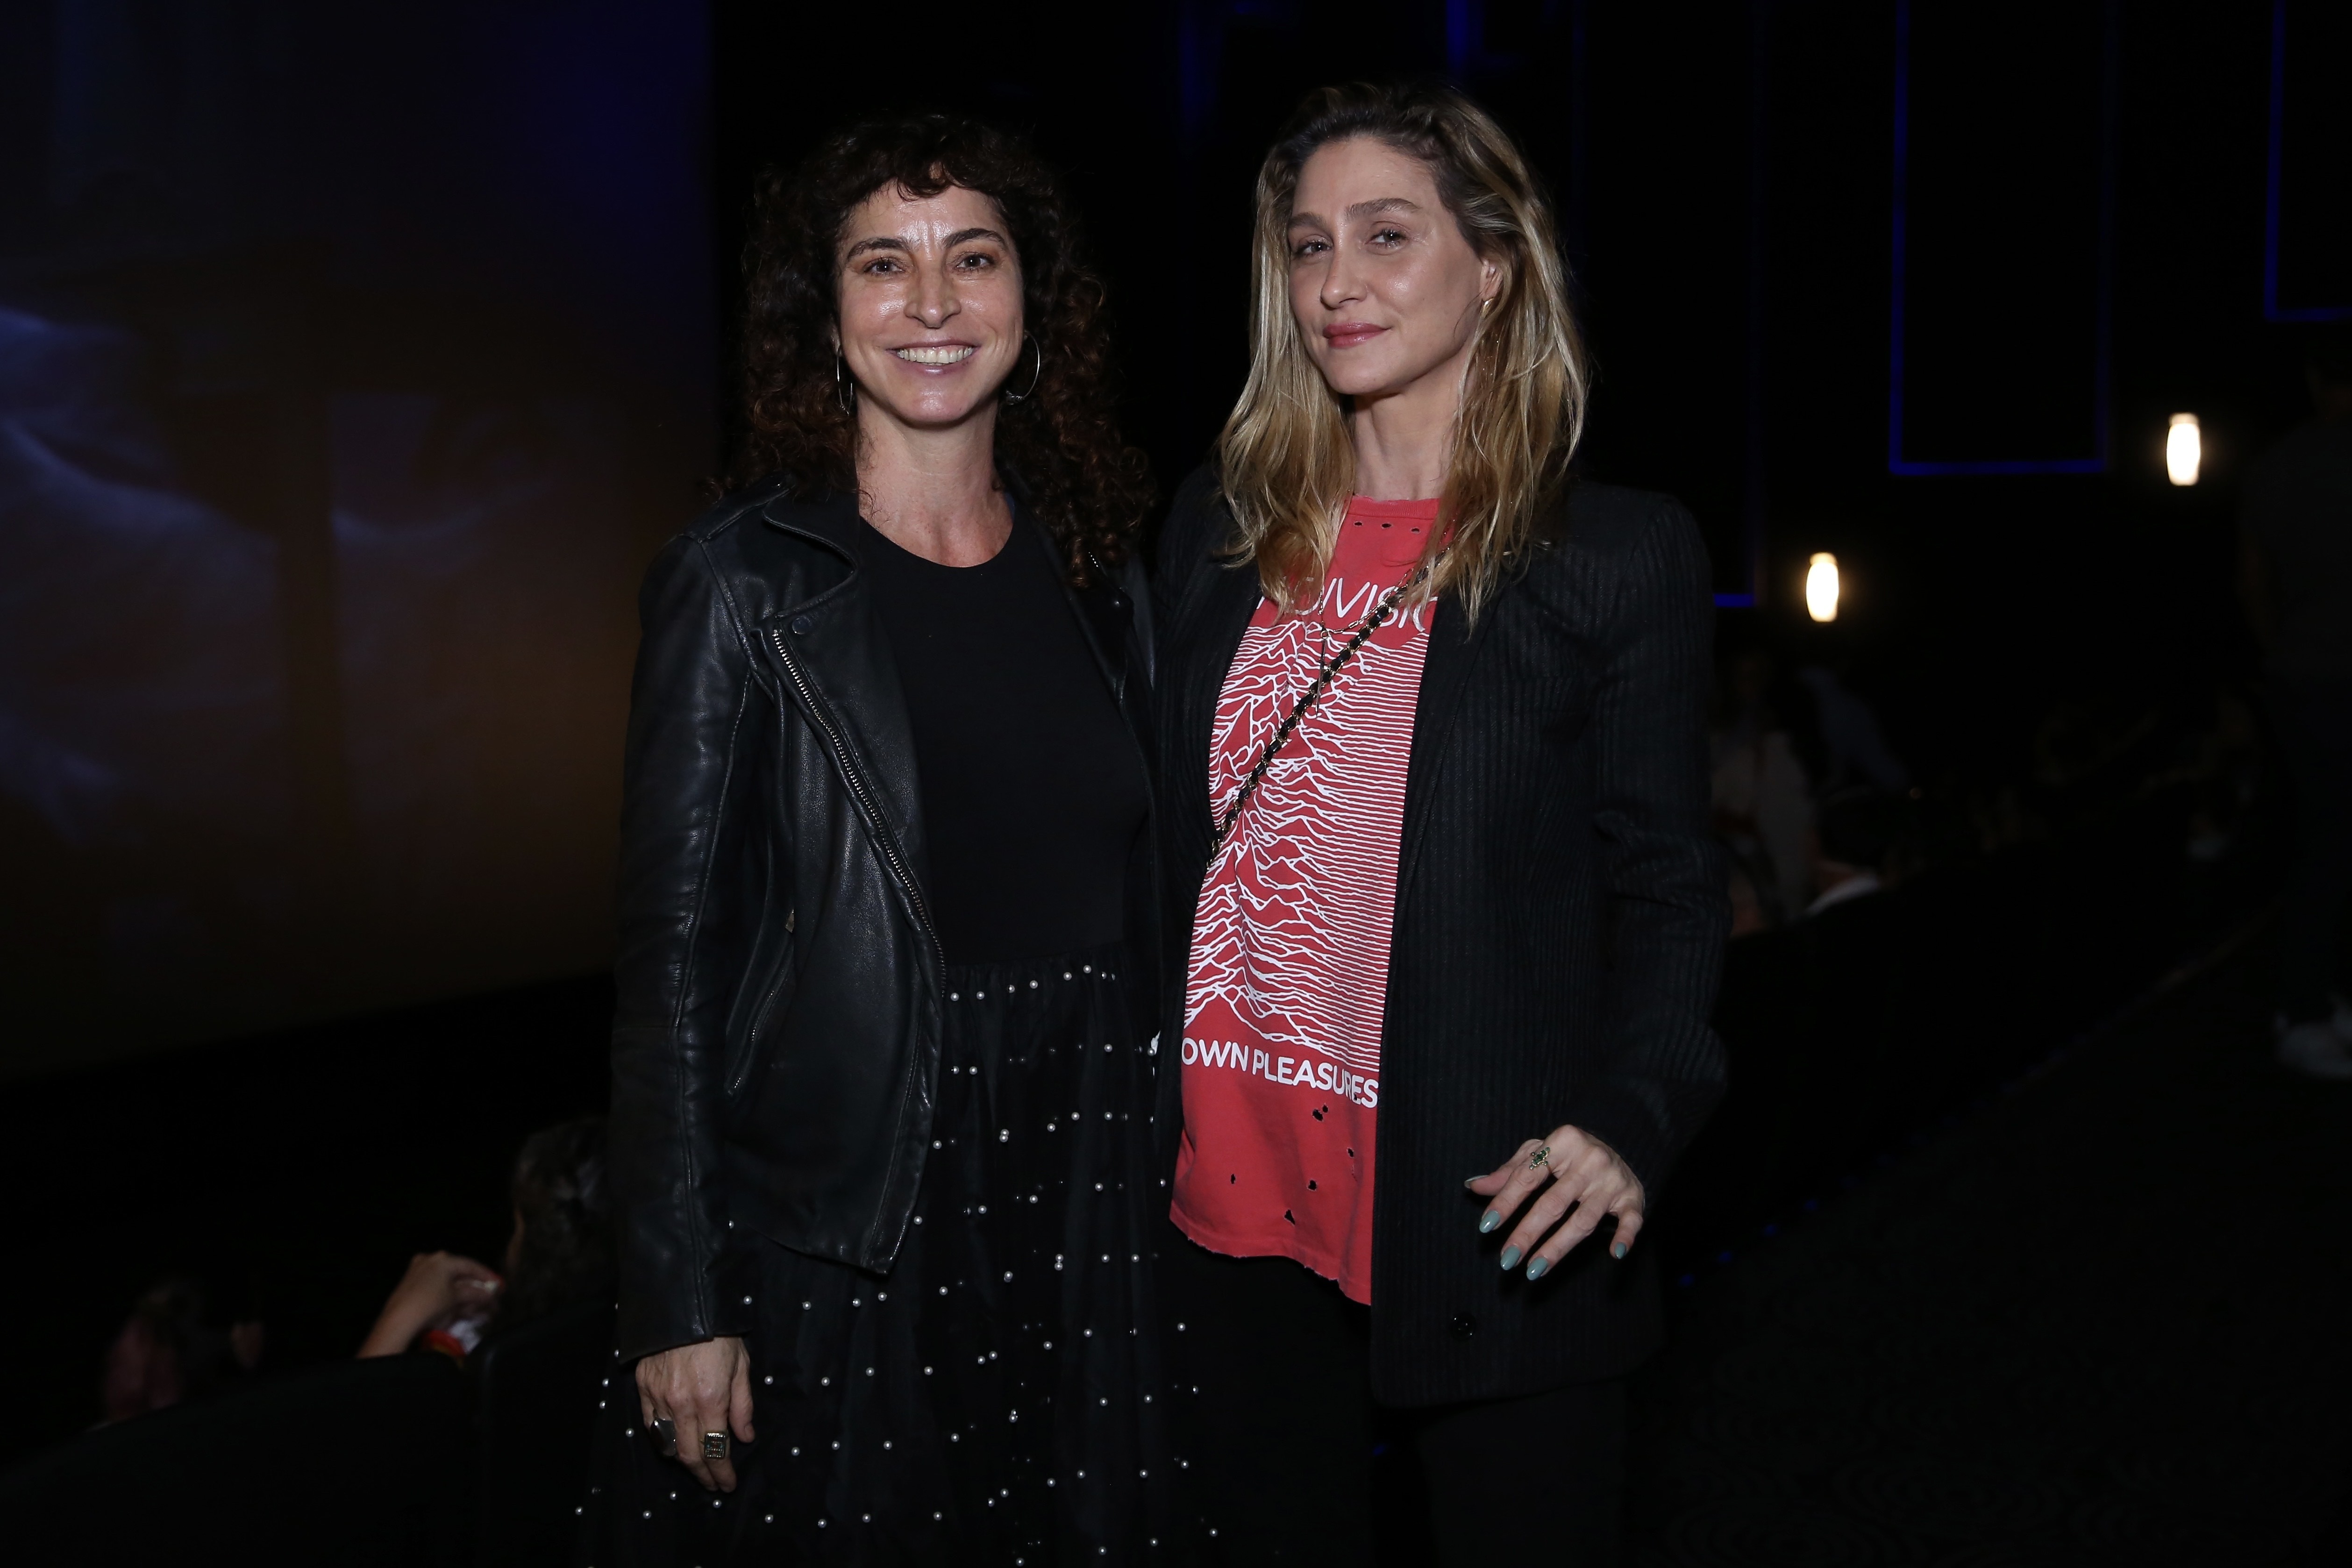 Rosane Svartman e Amora Mautner (Foto: Brazil News)